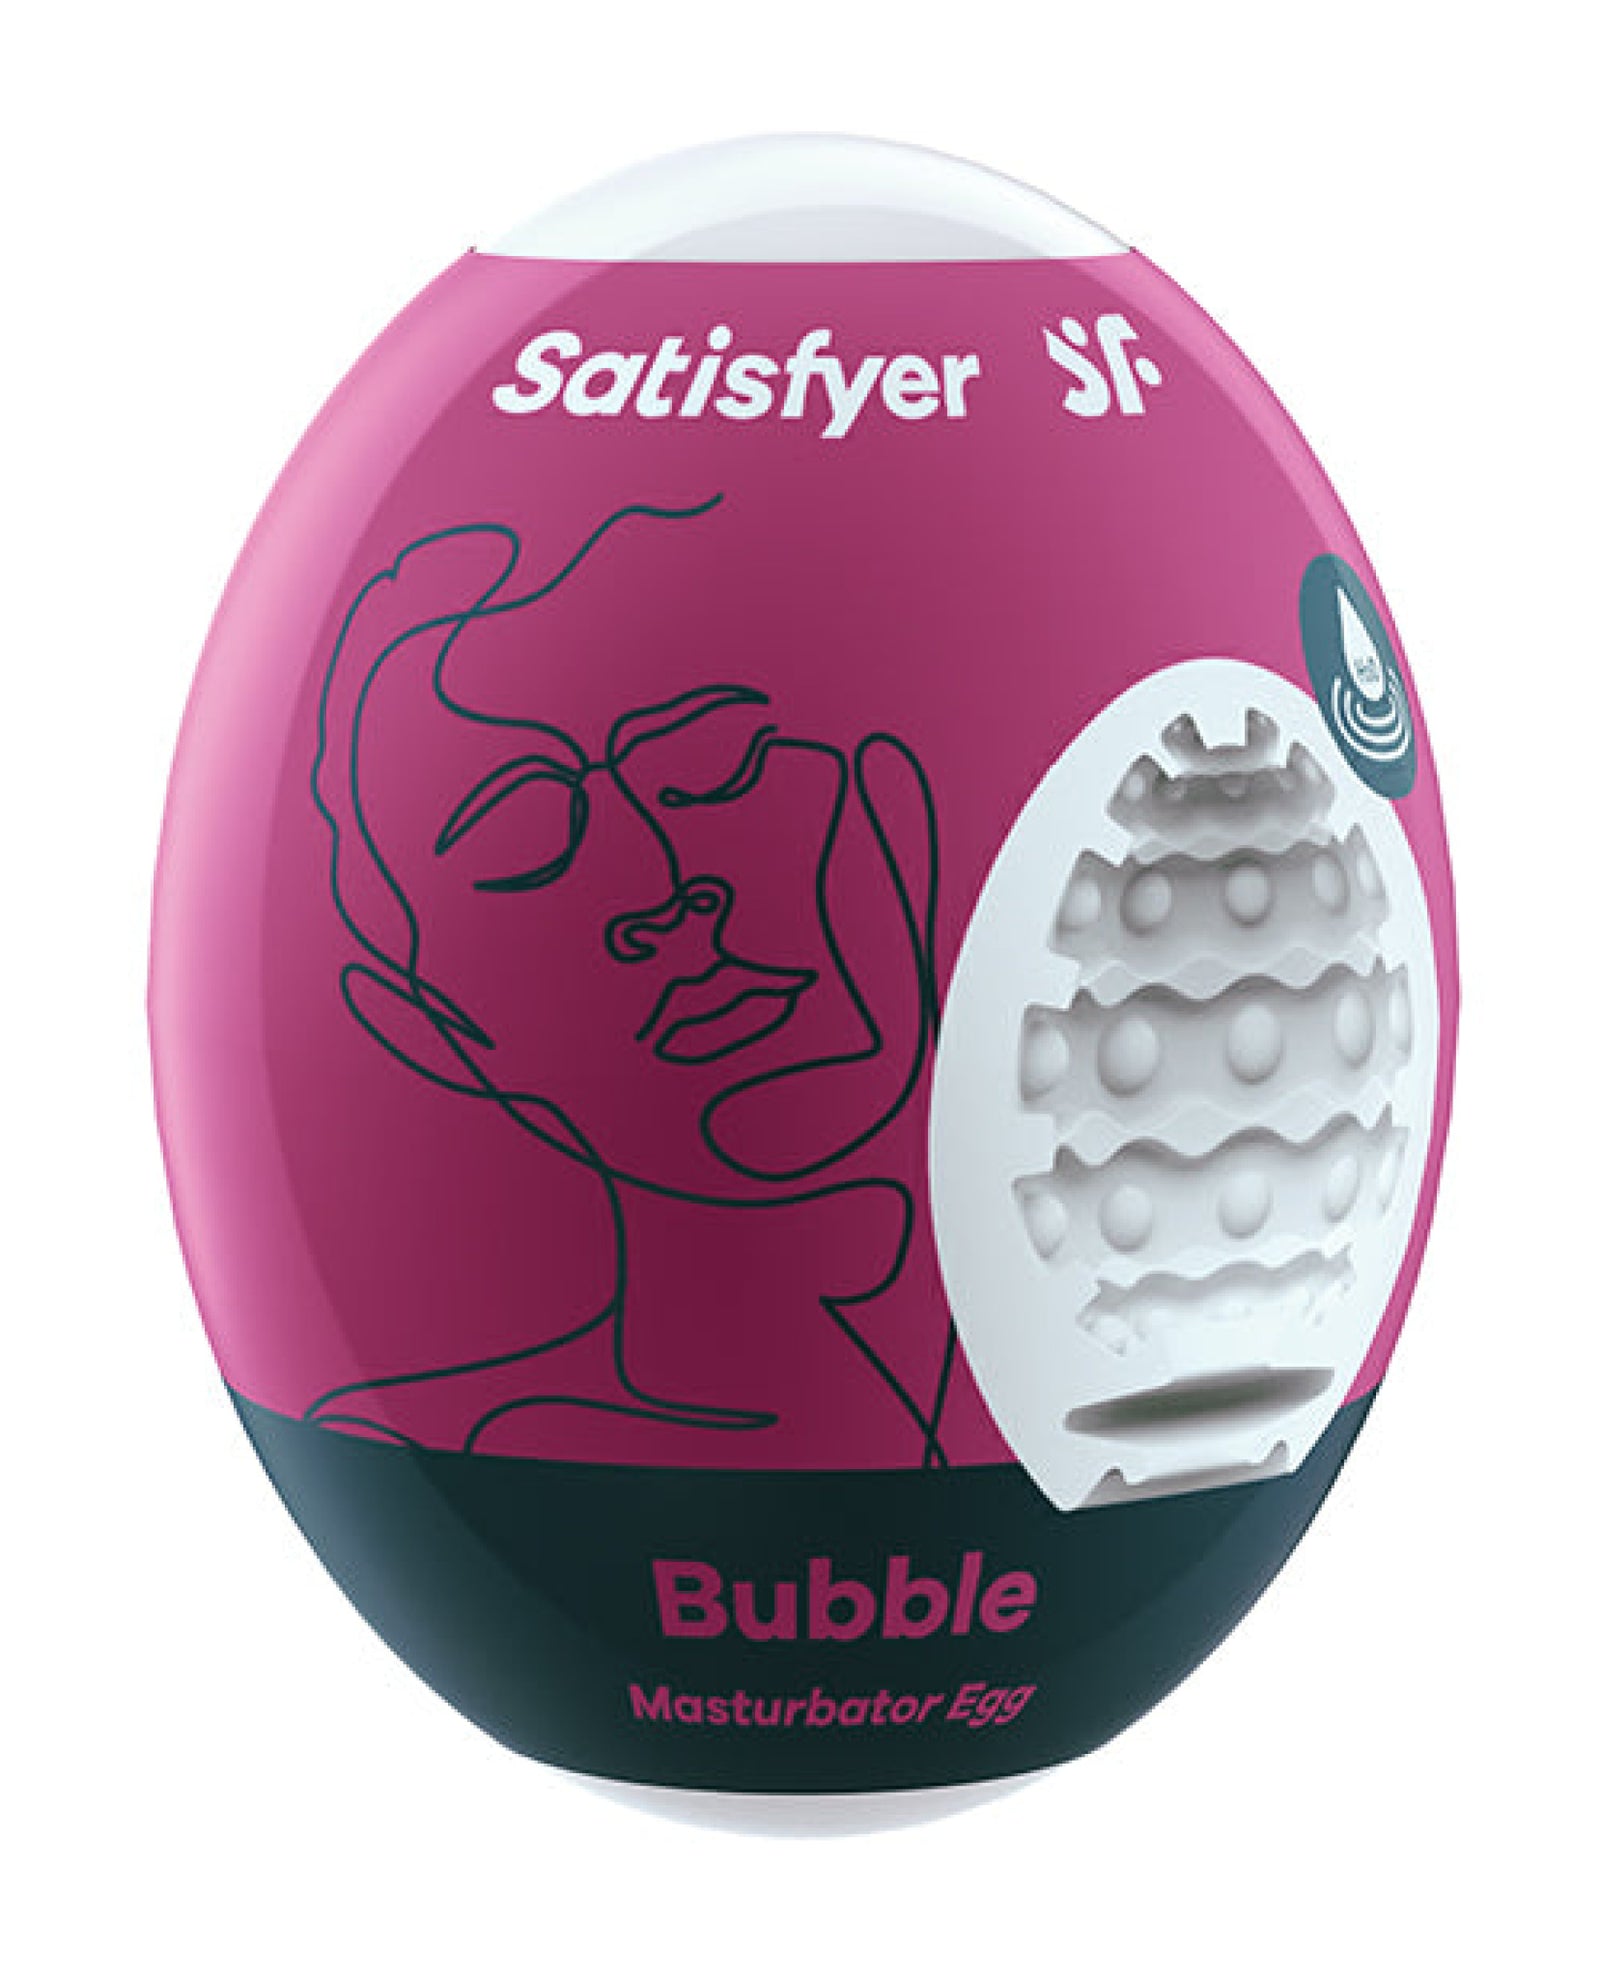 Satisfyer Masturbator Egg - Bubble Satisfyer®